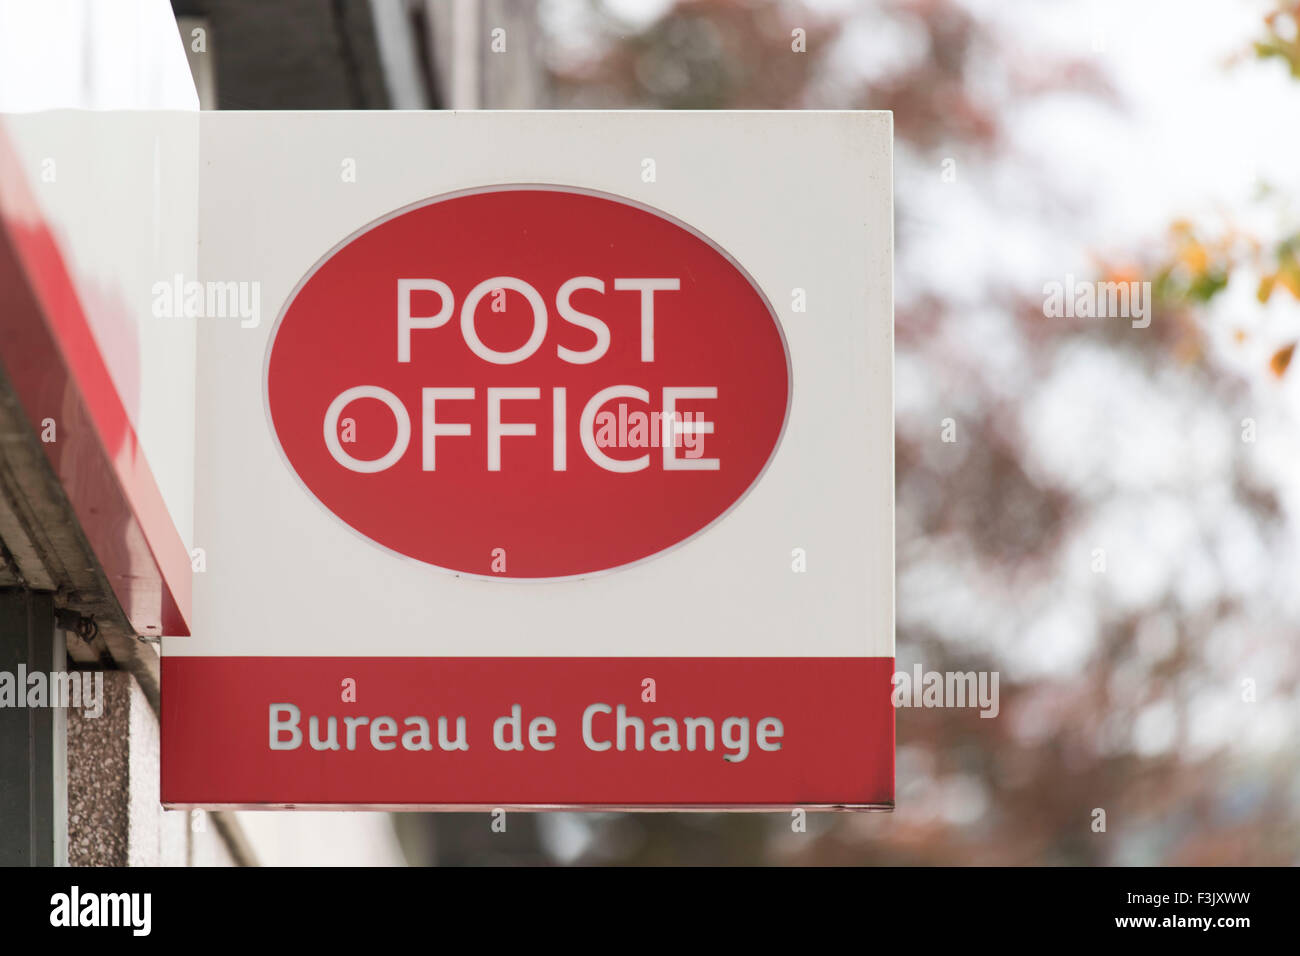 Royal Mail Post Office Bureau de Change Wechselstube. Stockfoto